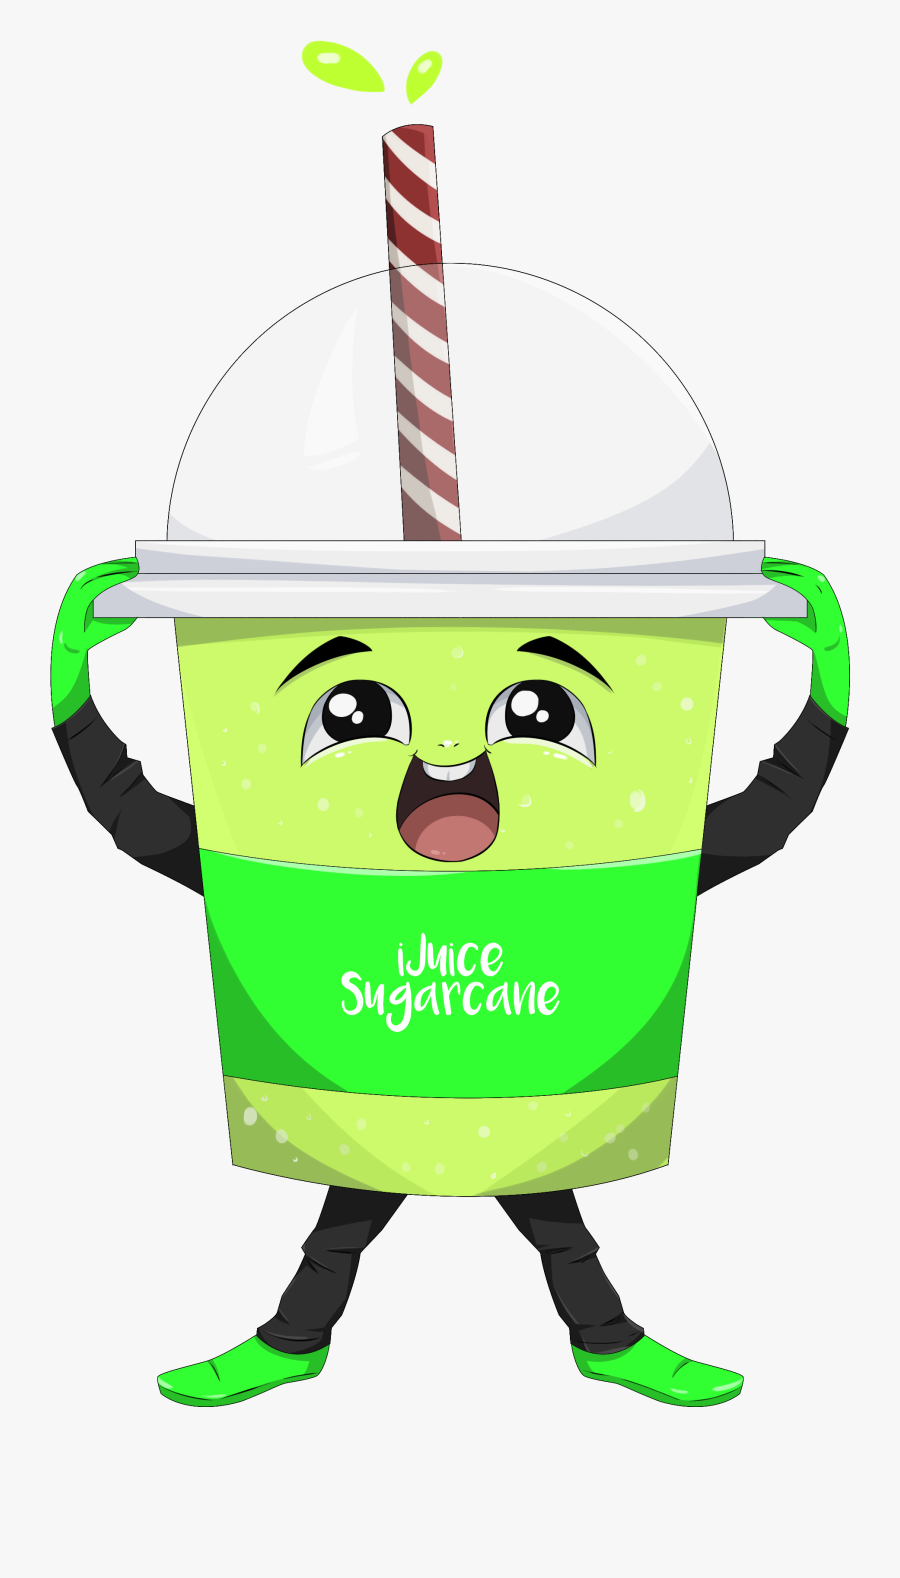 Logo Sugarcane Juice, Transparent Clipart